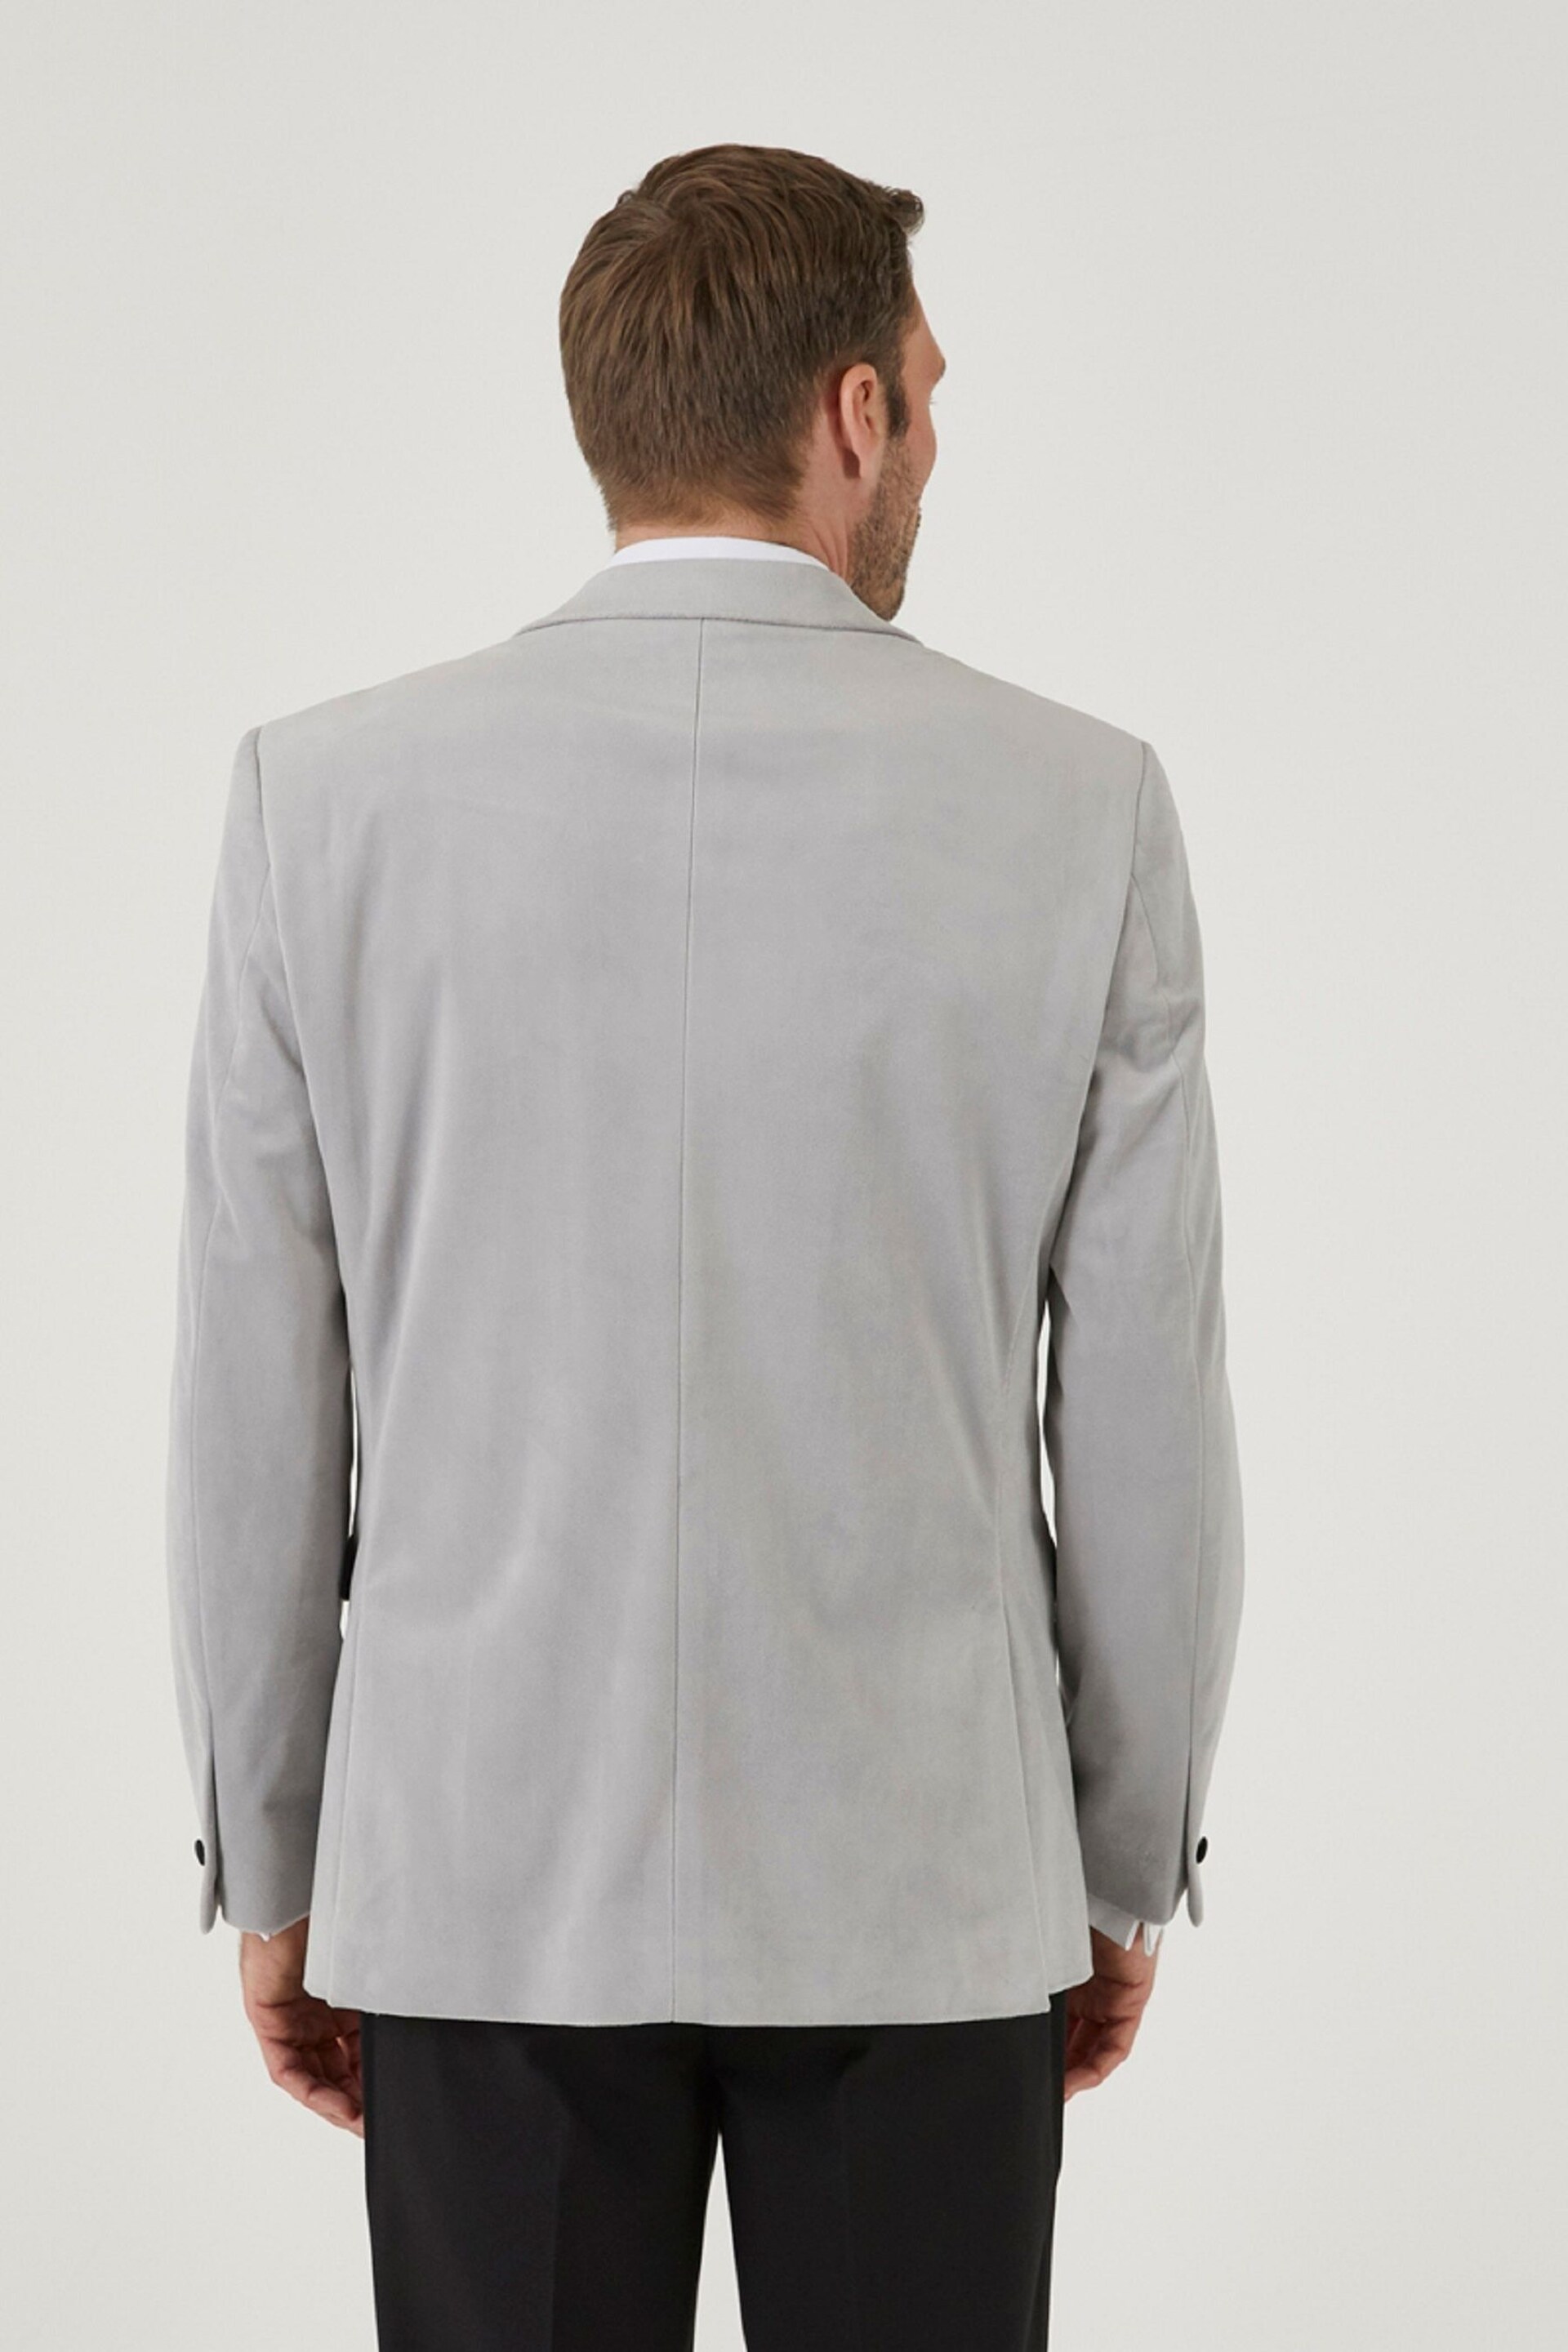 Skopes Jive Tailored Fit Silver Velvet Jacket - Image 2 of 6